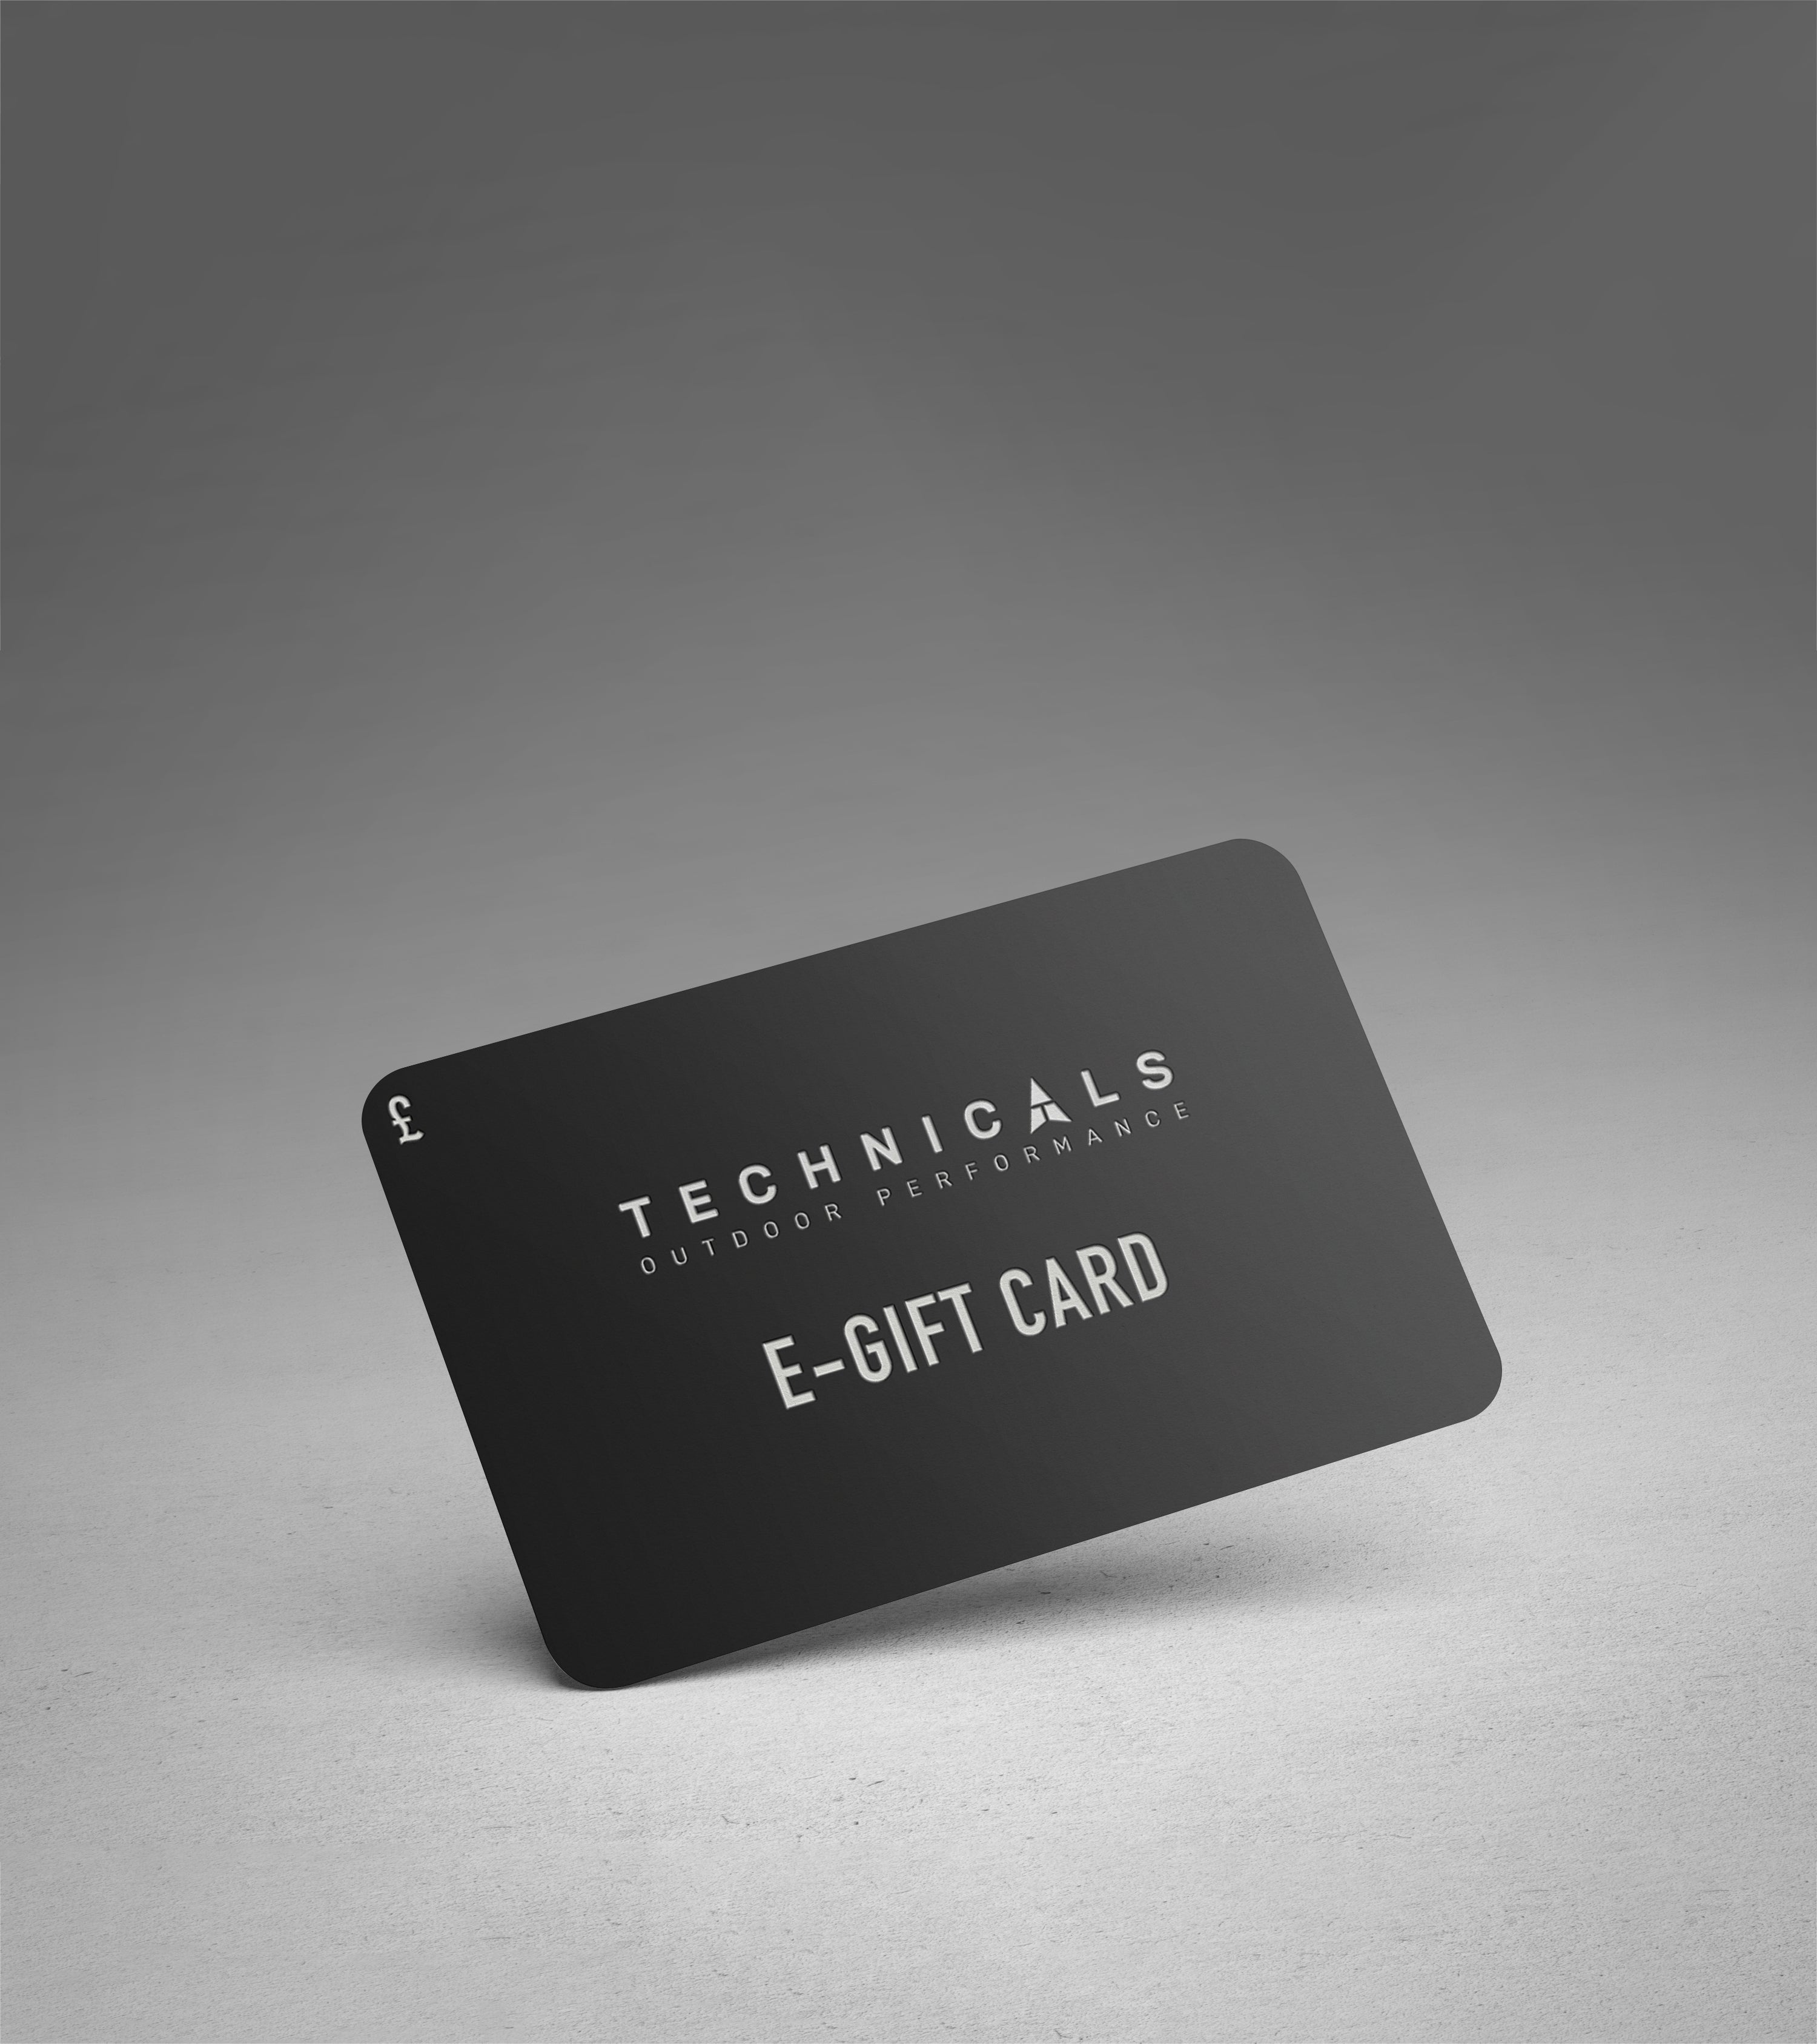 TECHNICALS E-GIFT CARD